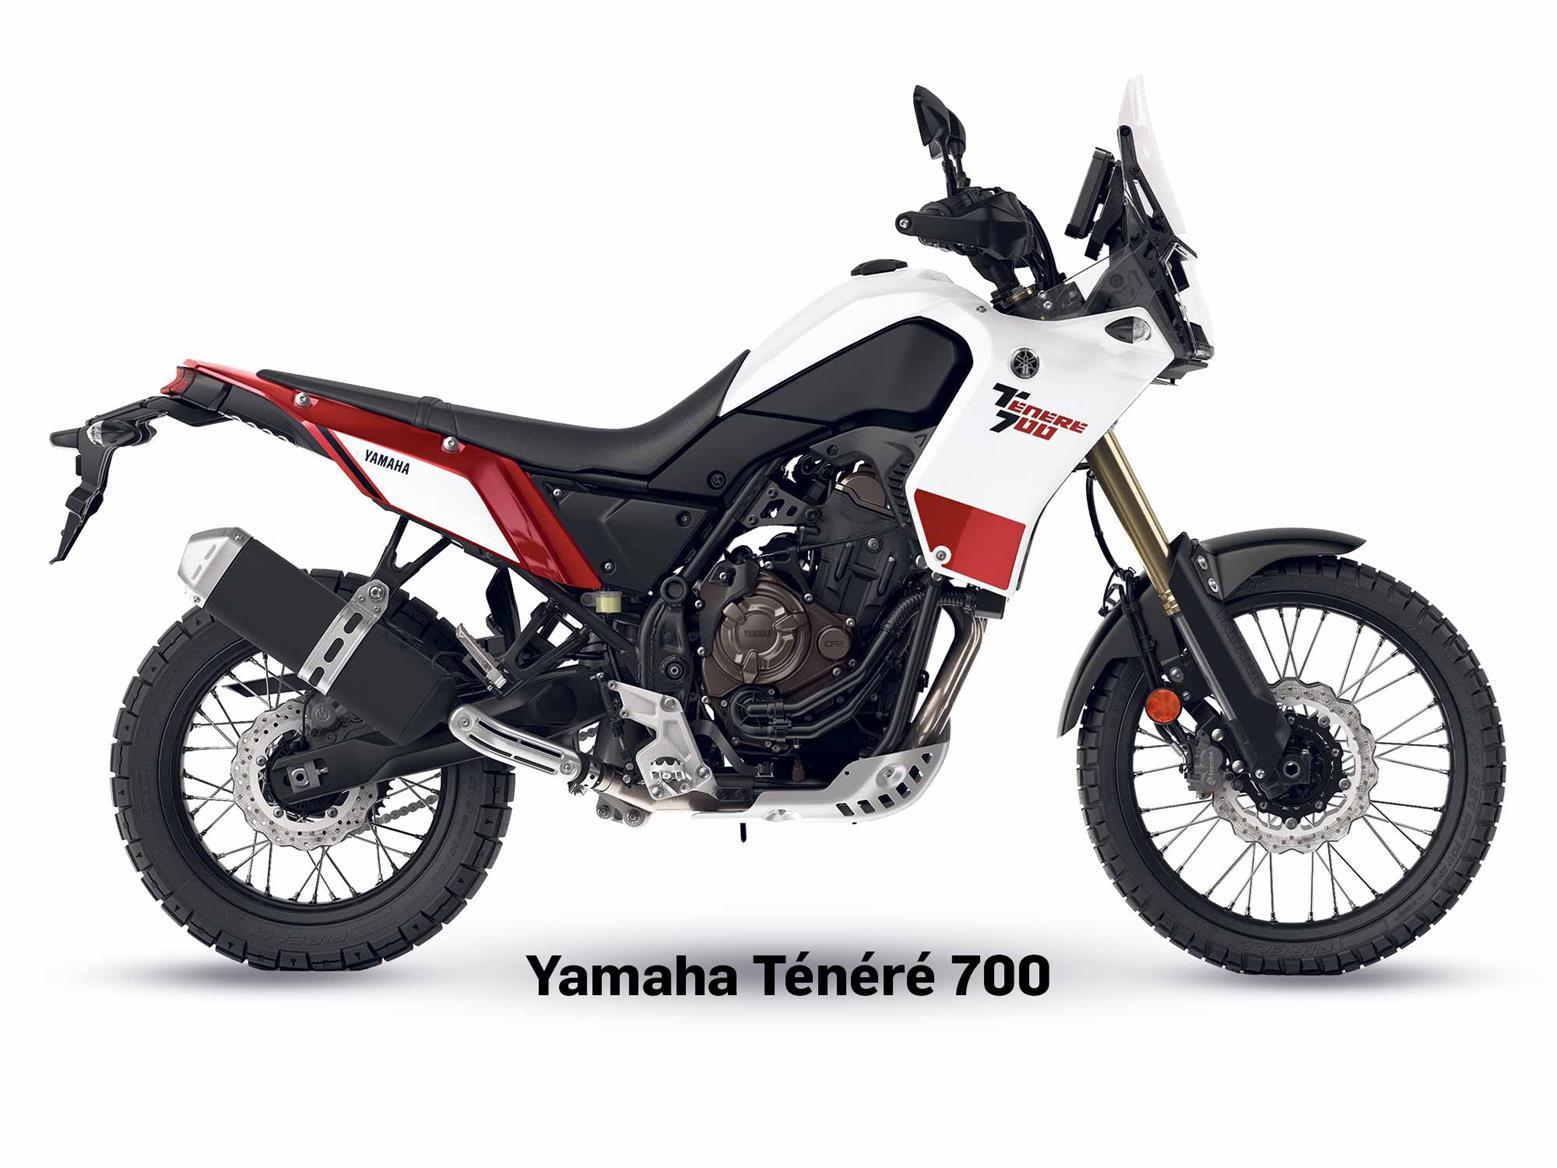 Read MCN's expert Yamaha Ténéré 700 long-term test here